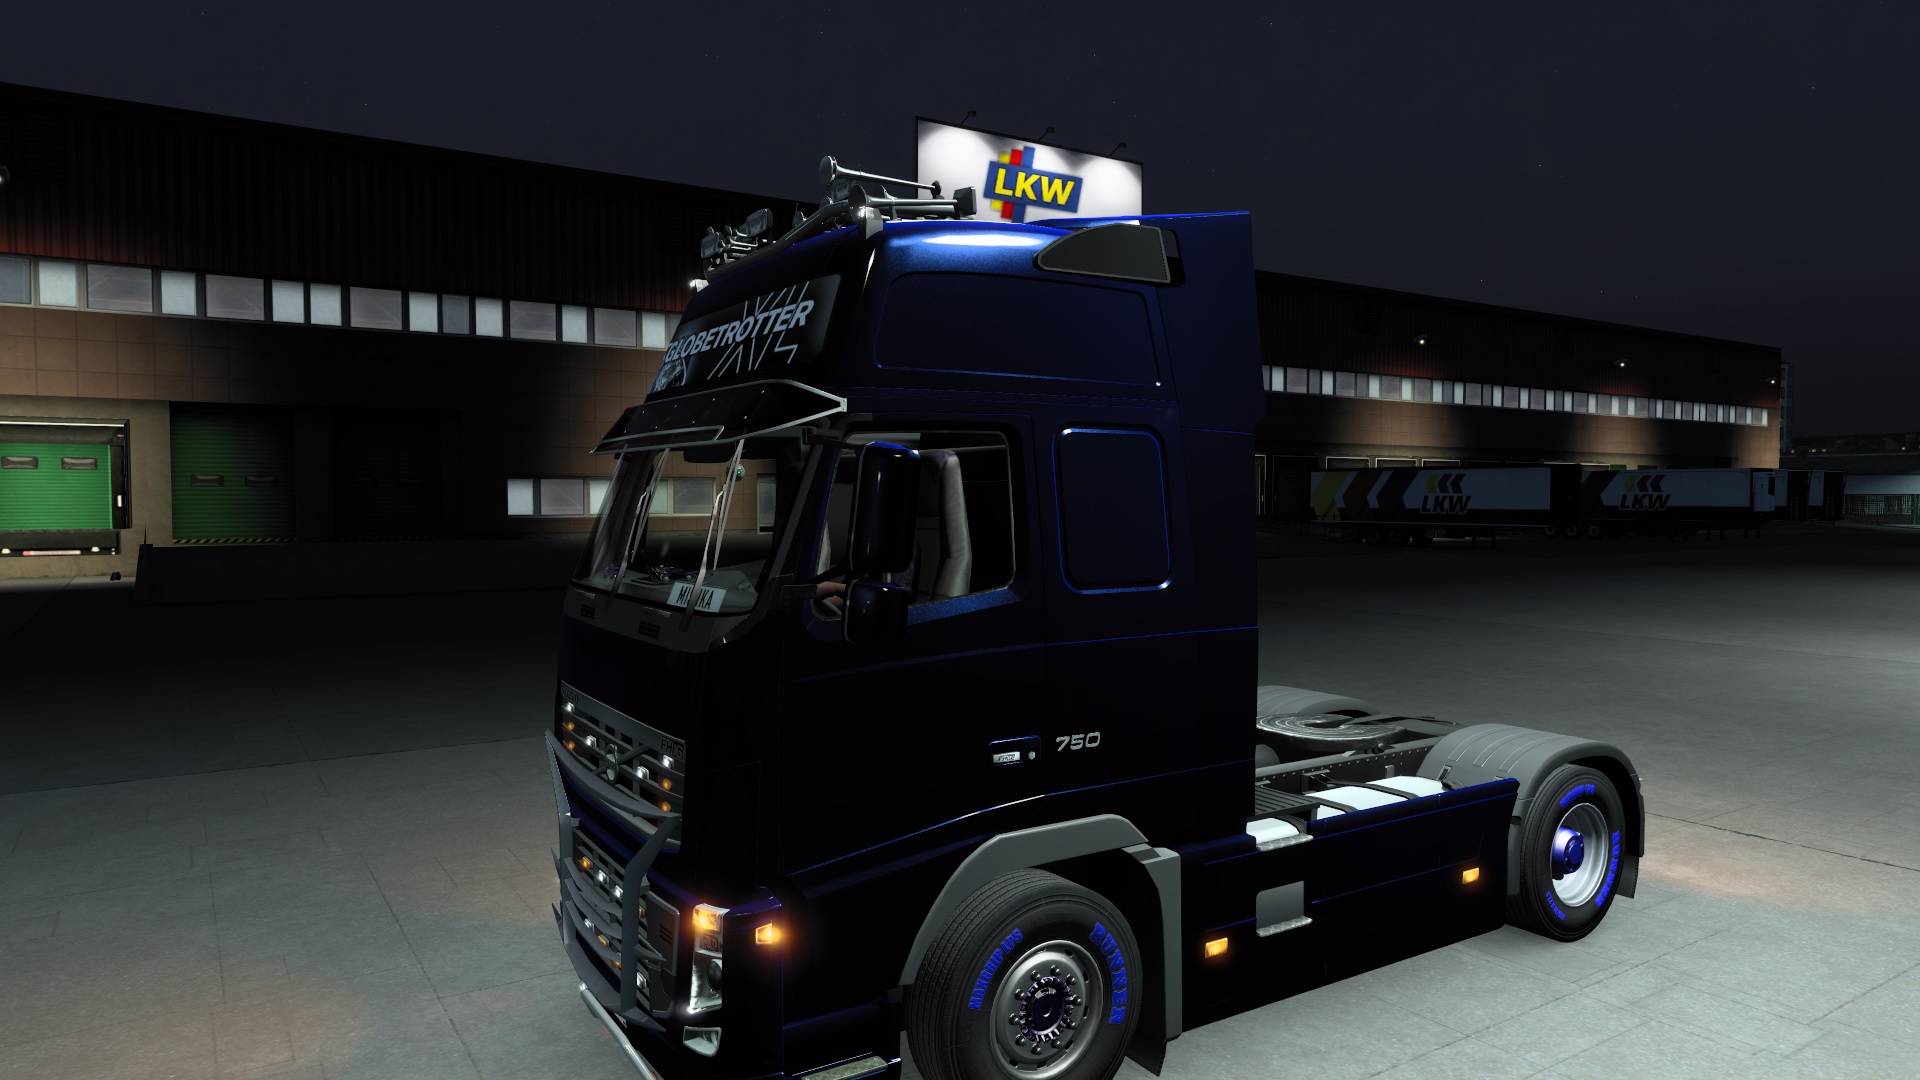 Euro Truck Simulator 2 (чё будет, то будет)